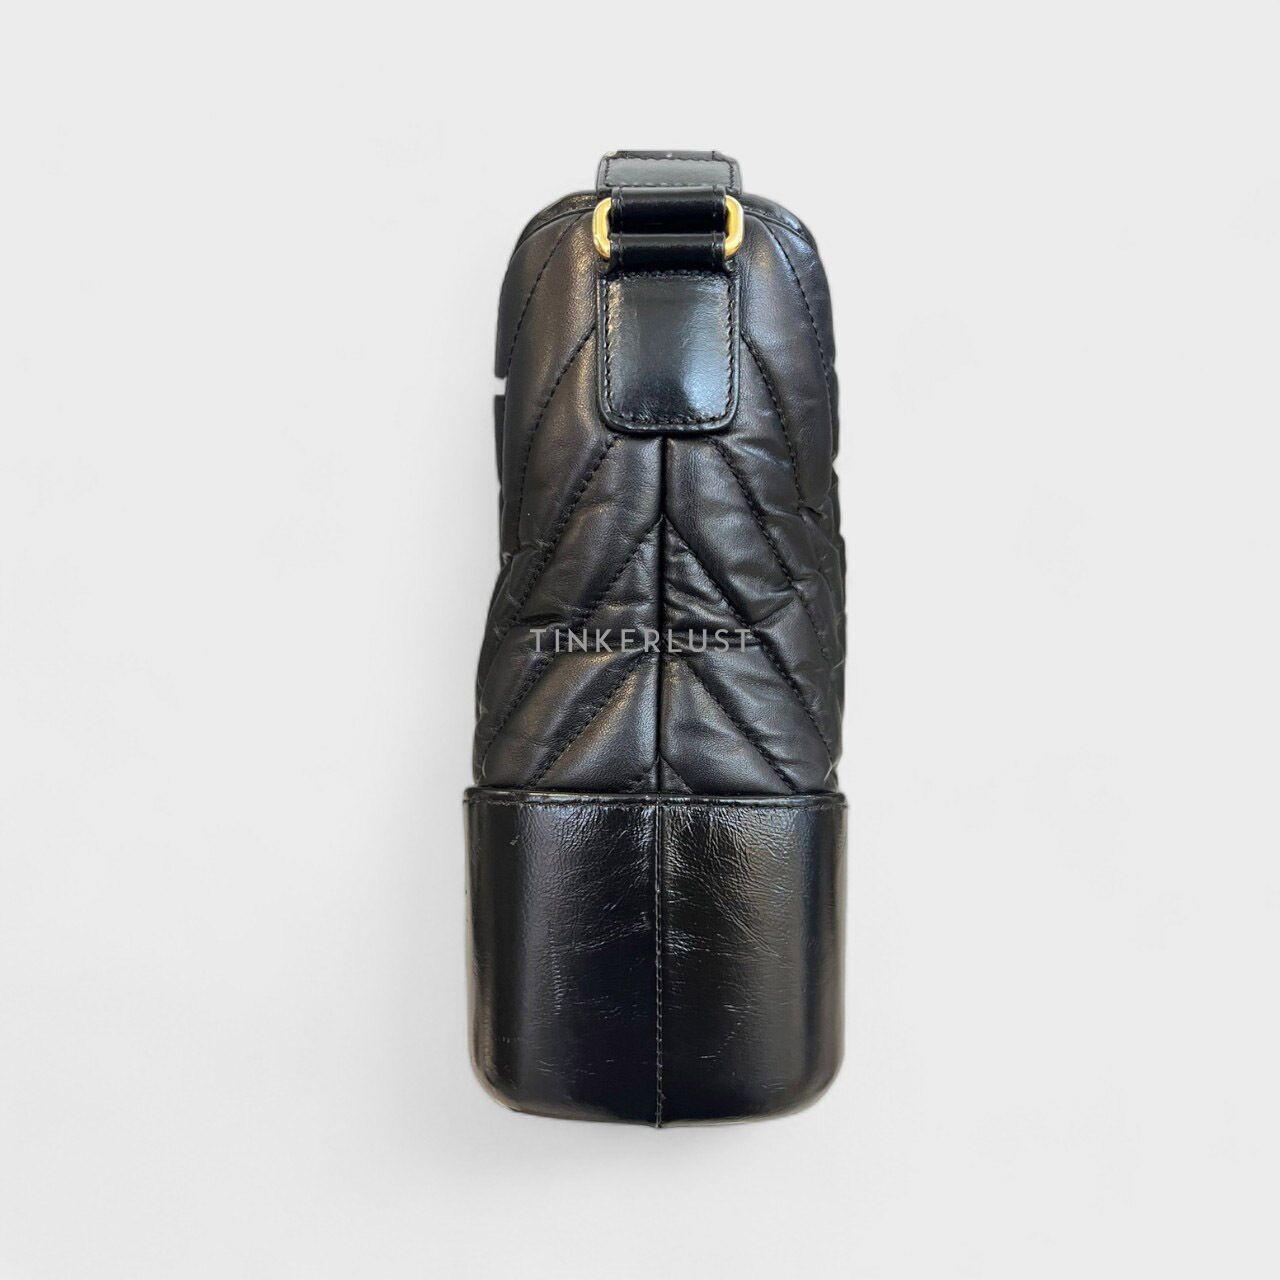 Chanel Gabrielle Medium Black Chevron Calfskin #26 Shoulder Bag